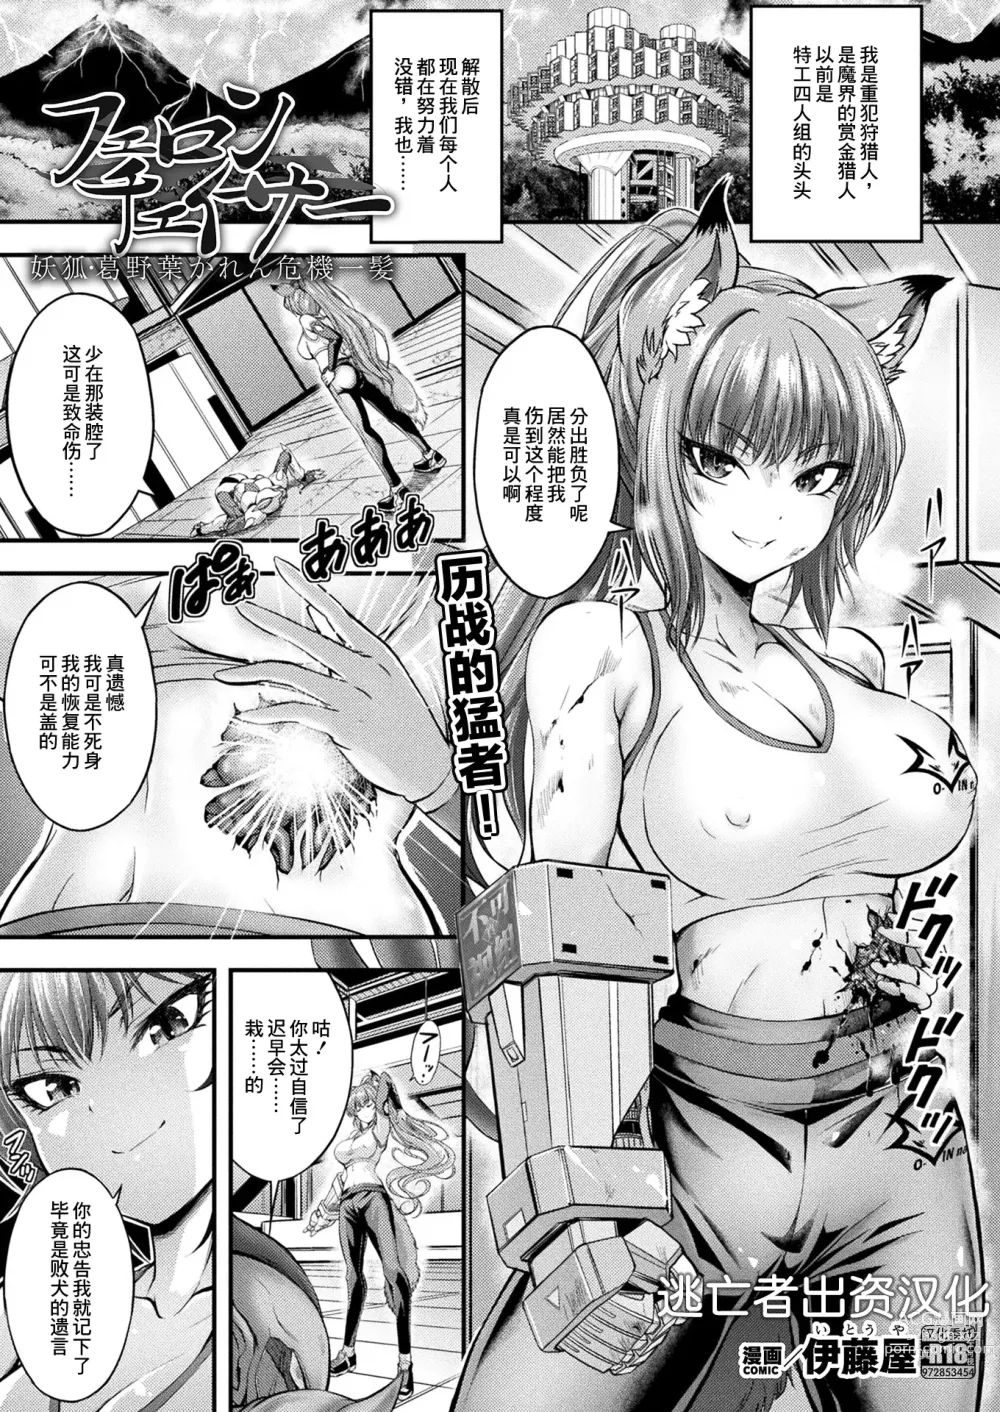 Page 1 of manga Felon Chaser Youko Kuzunoha Karen Kikiippatsu